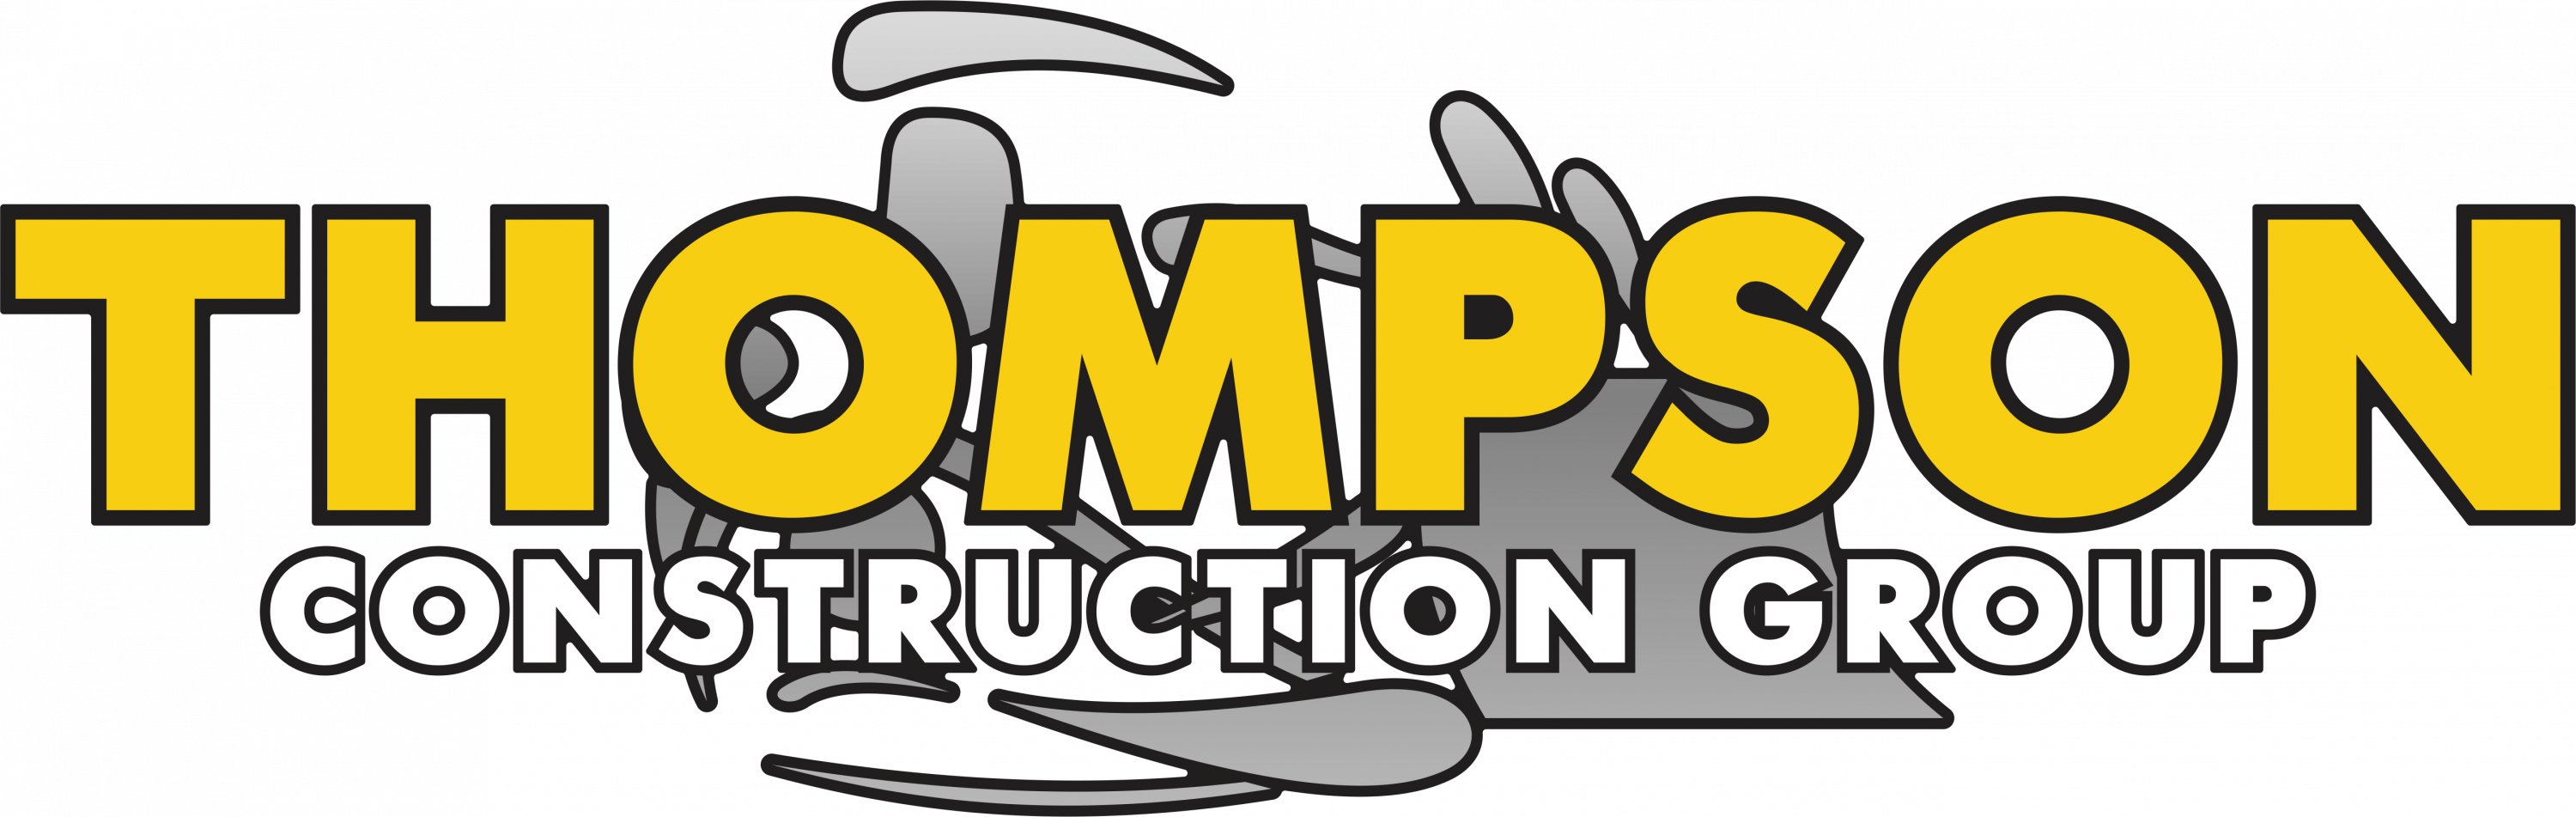 Thompson Construction Group's Logo